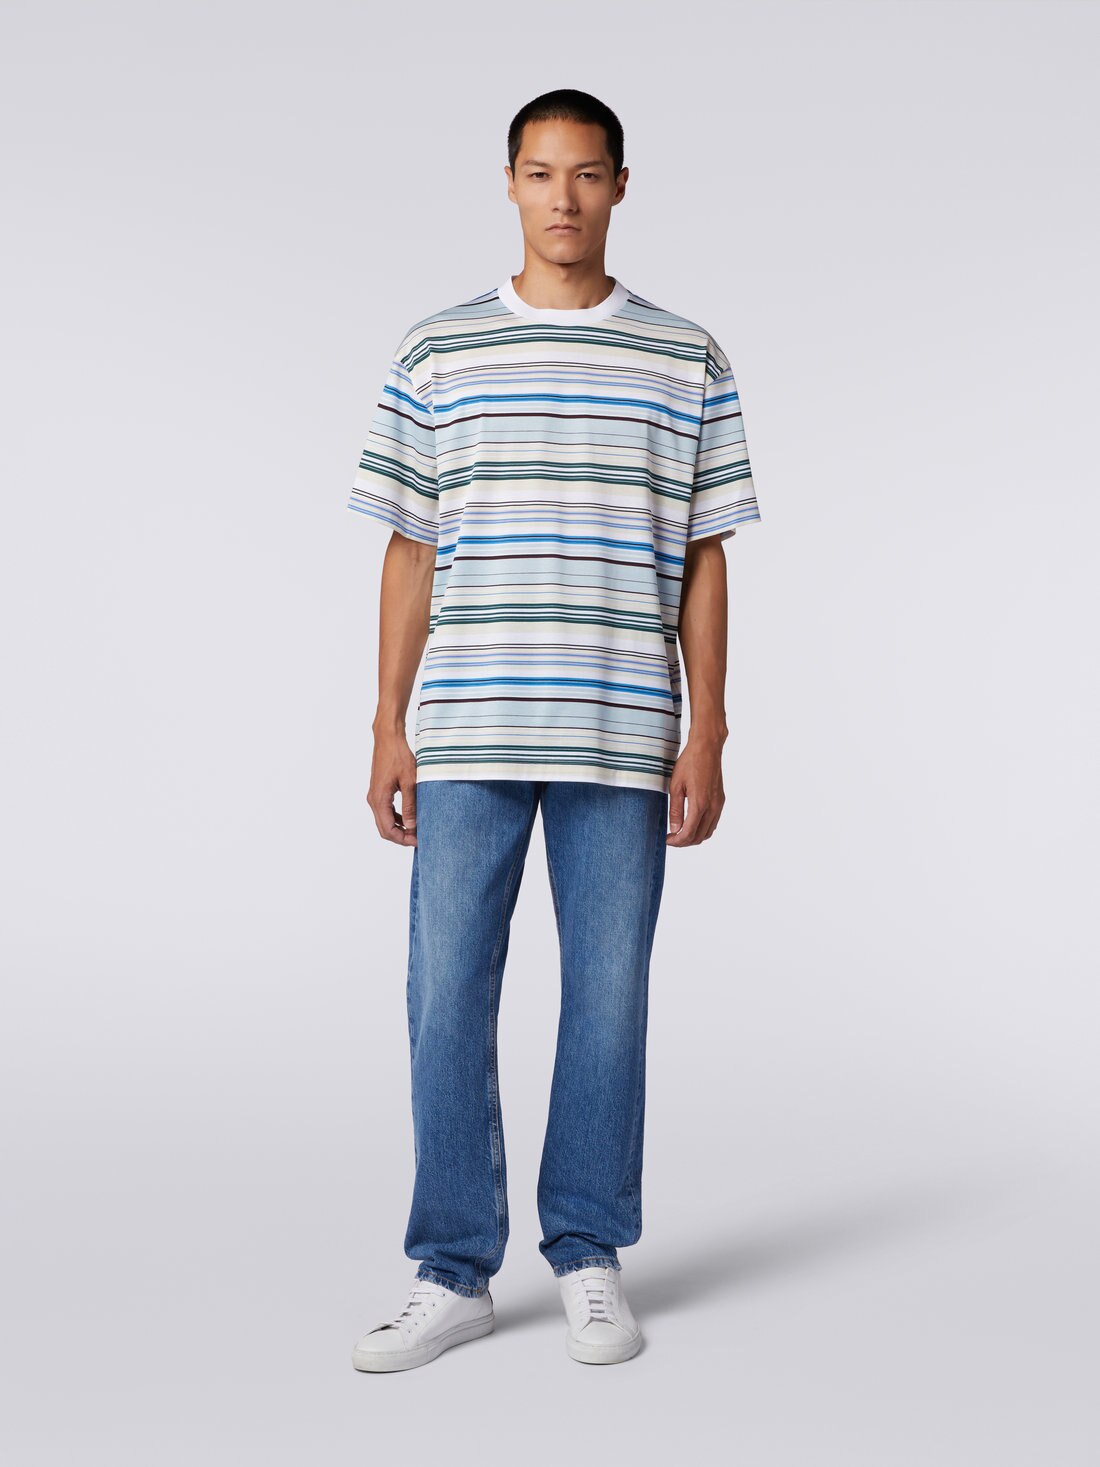 Striped cotton jersey T-shirt, Multicoloured  - US23WL06BJ00GOSM8Z7 - 1